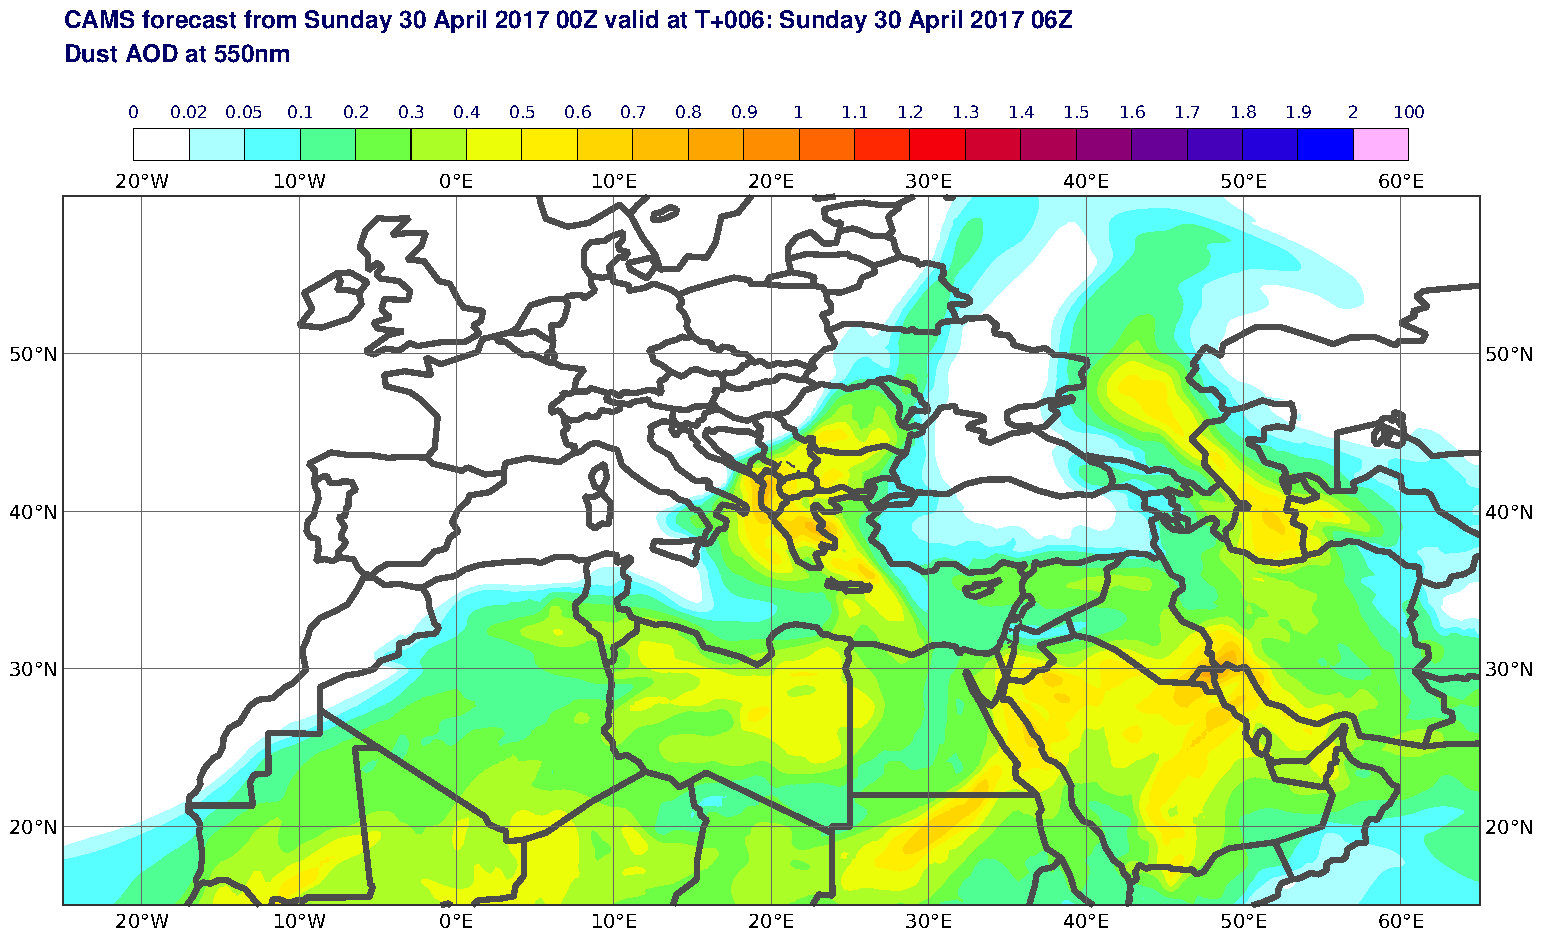 Dust AOD at 550nm valid at T6 - 2017-04-30 06:00